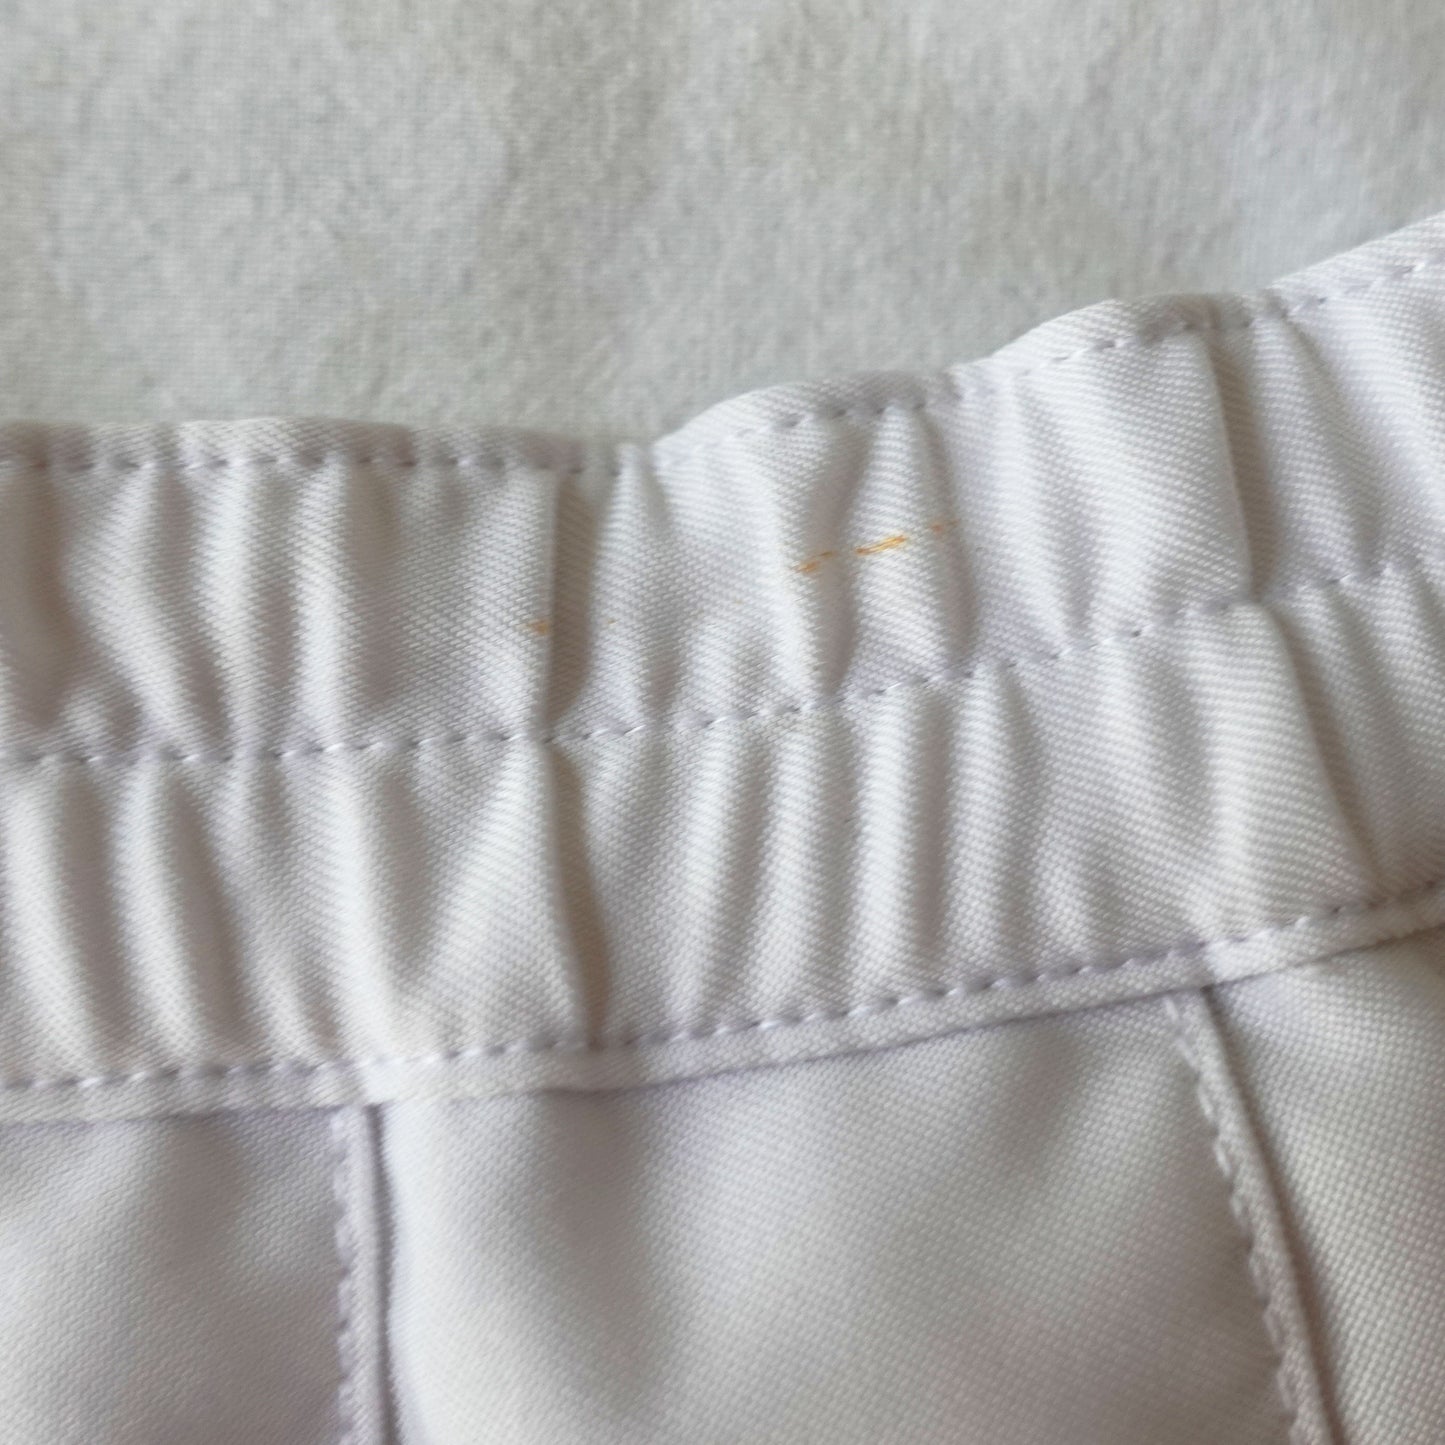 white pleated tennis skirt